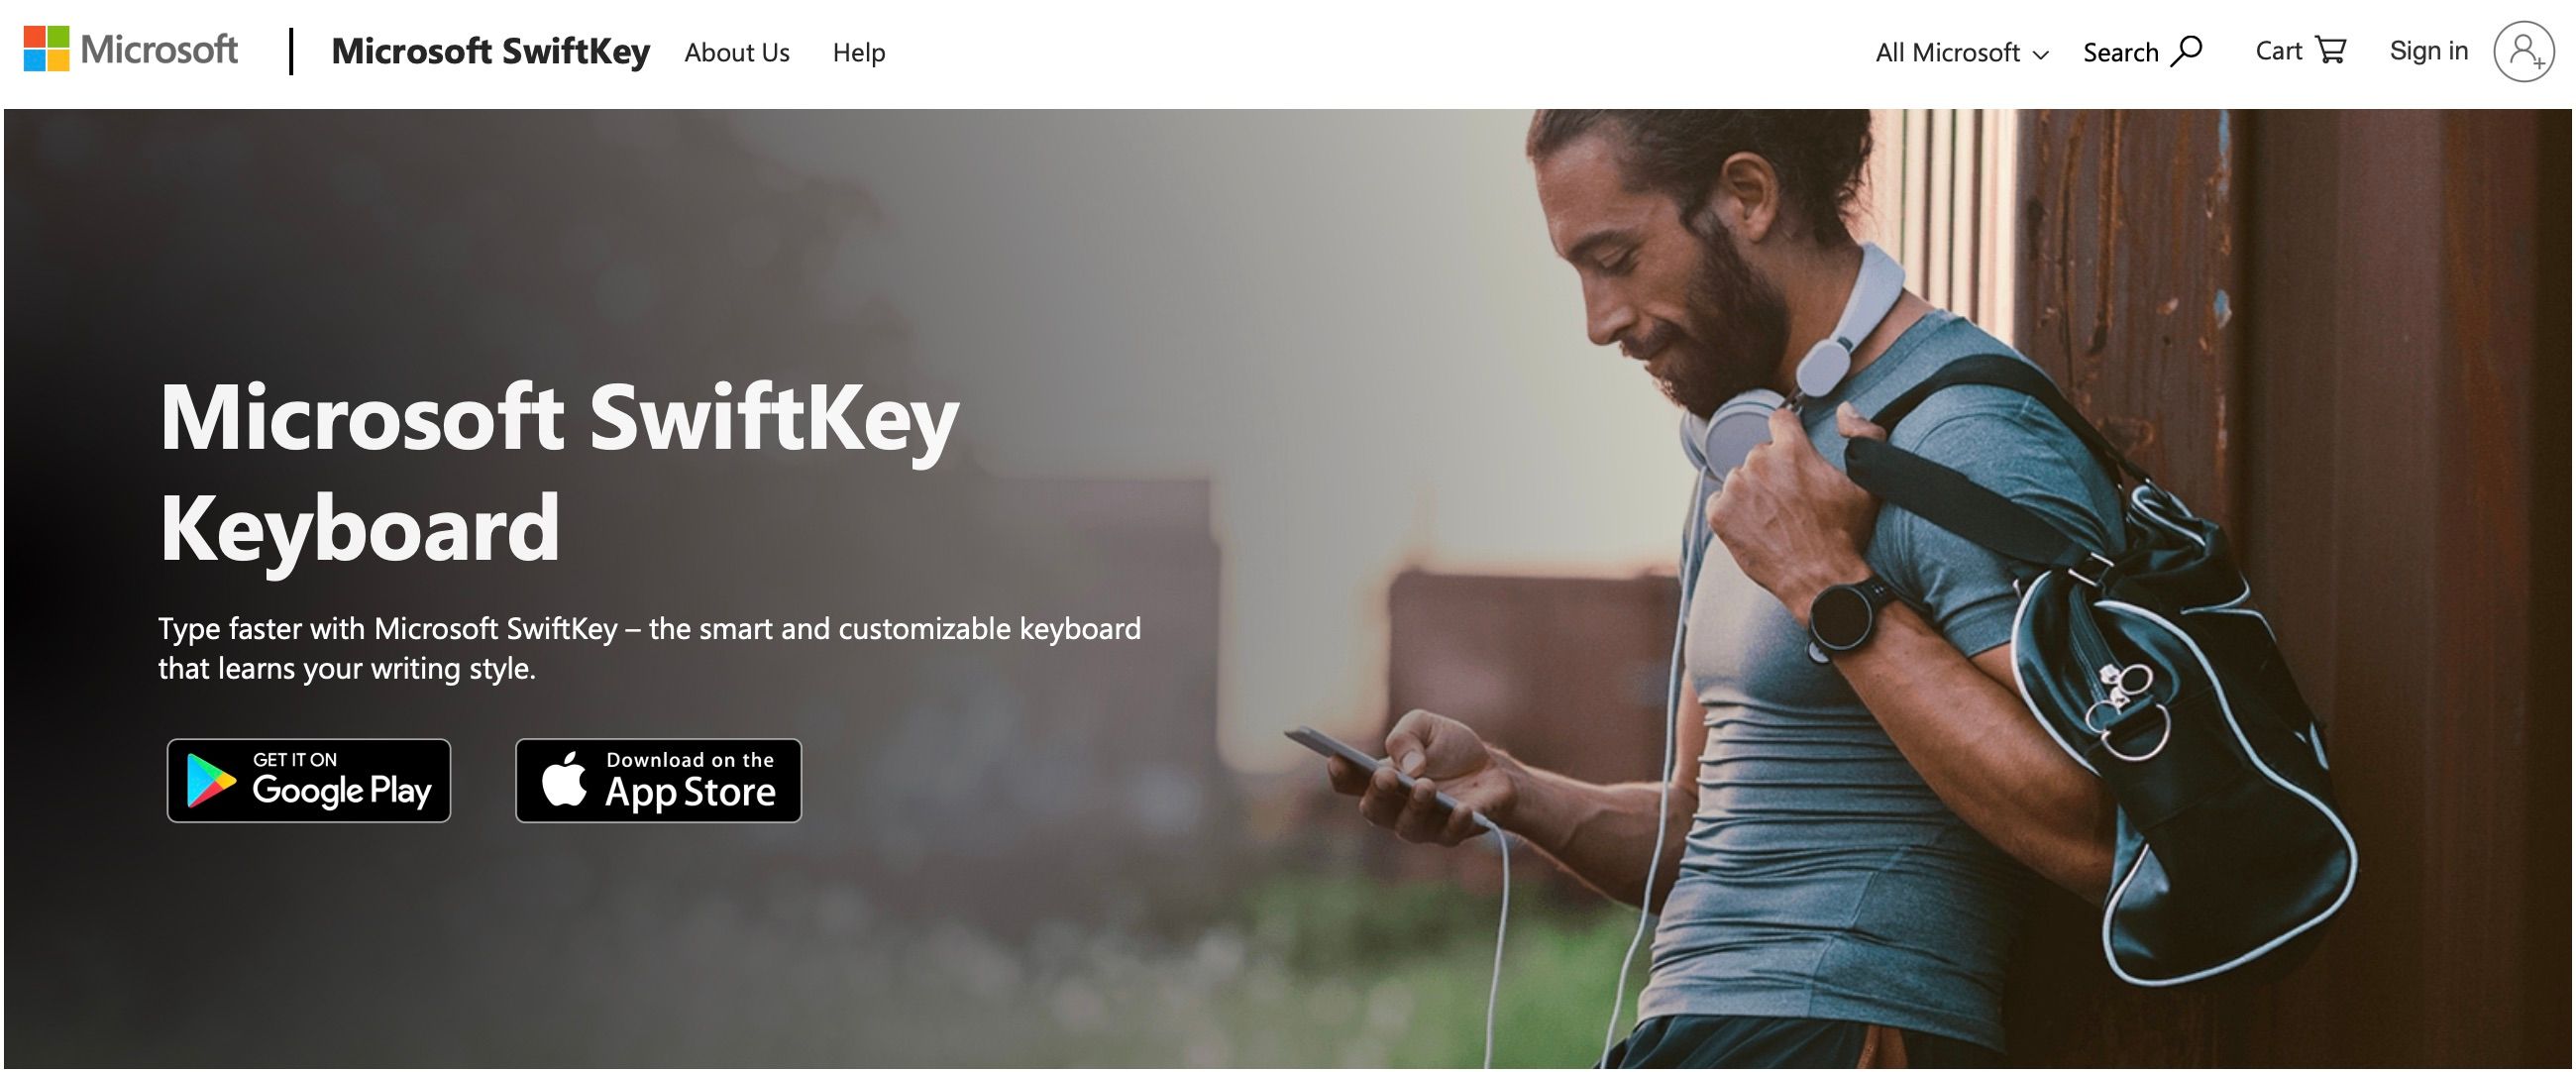 Microsoft SwiftKey Home Page